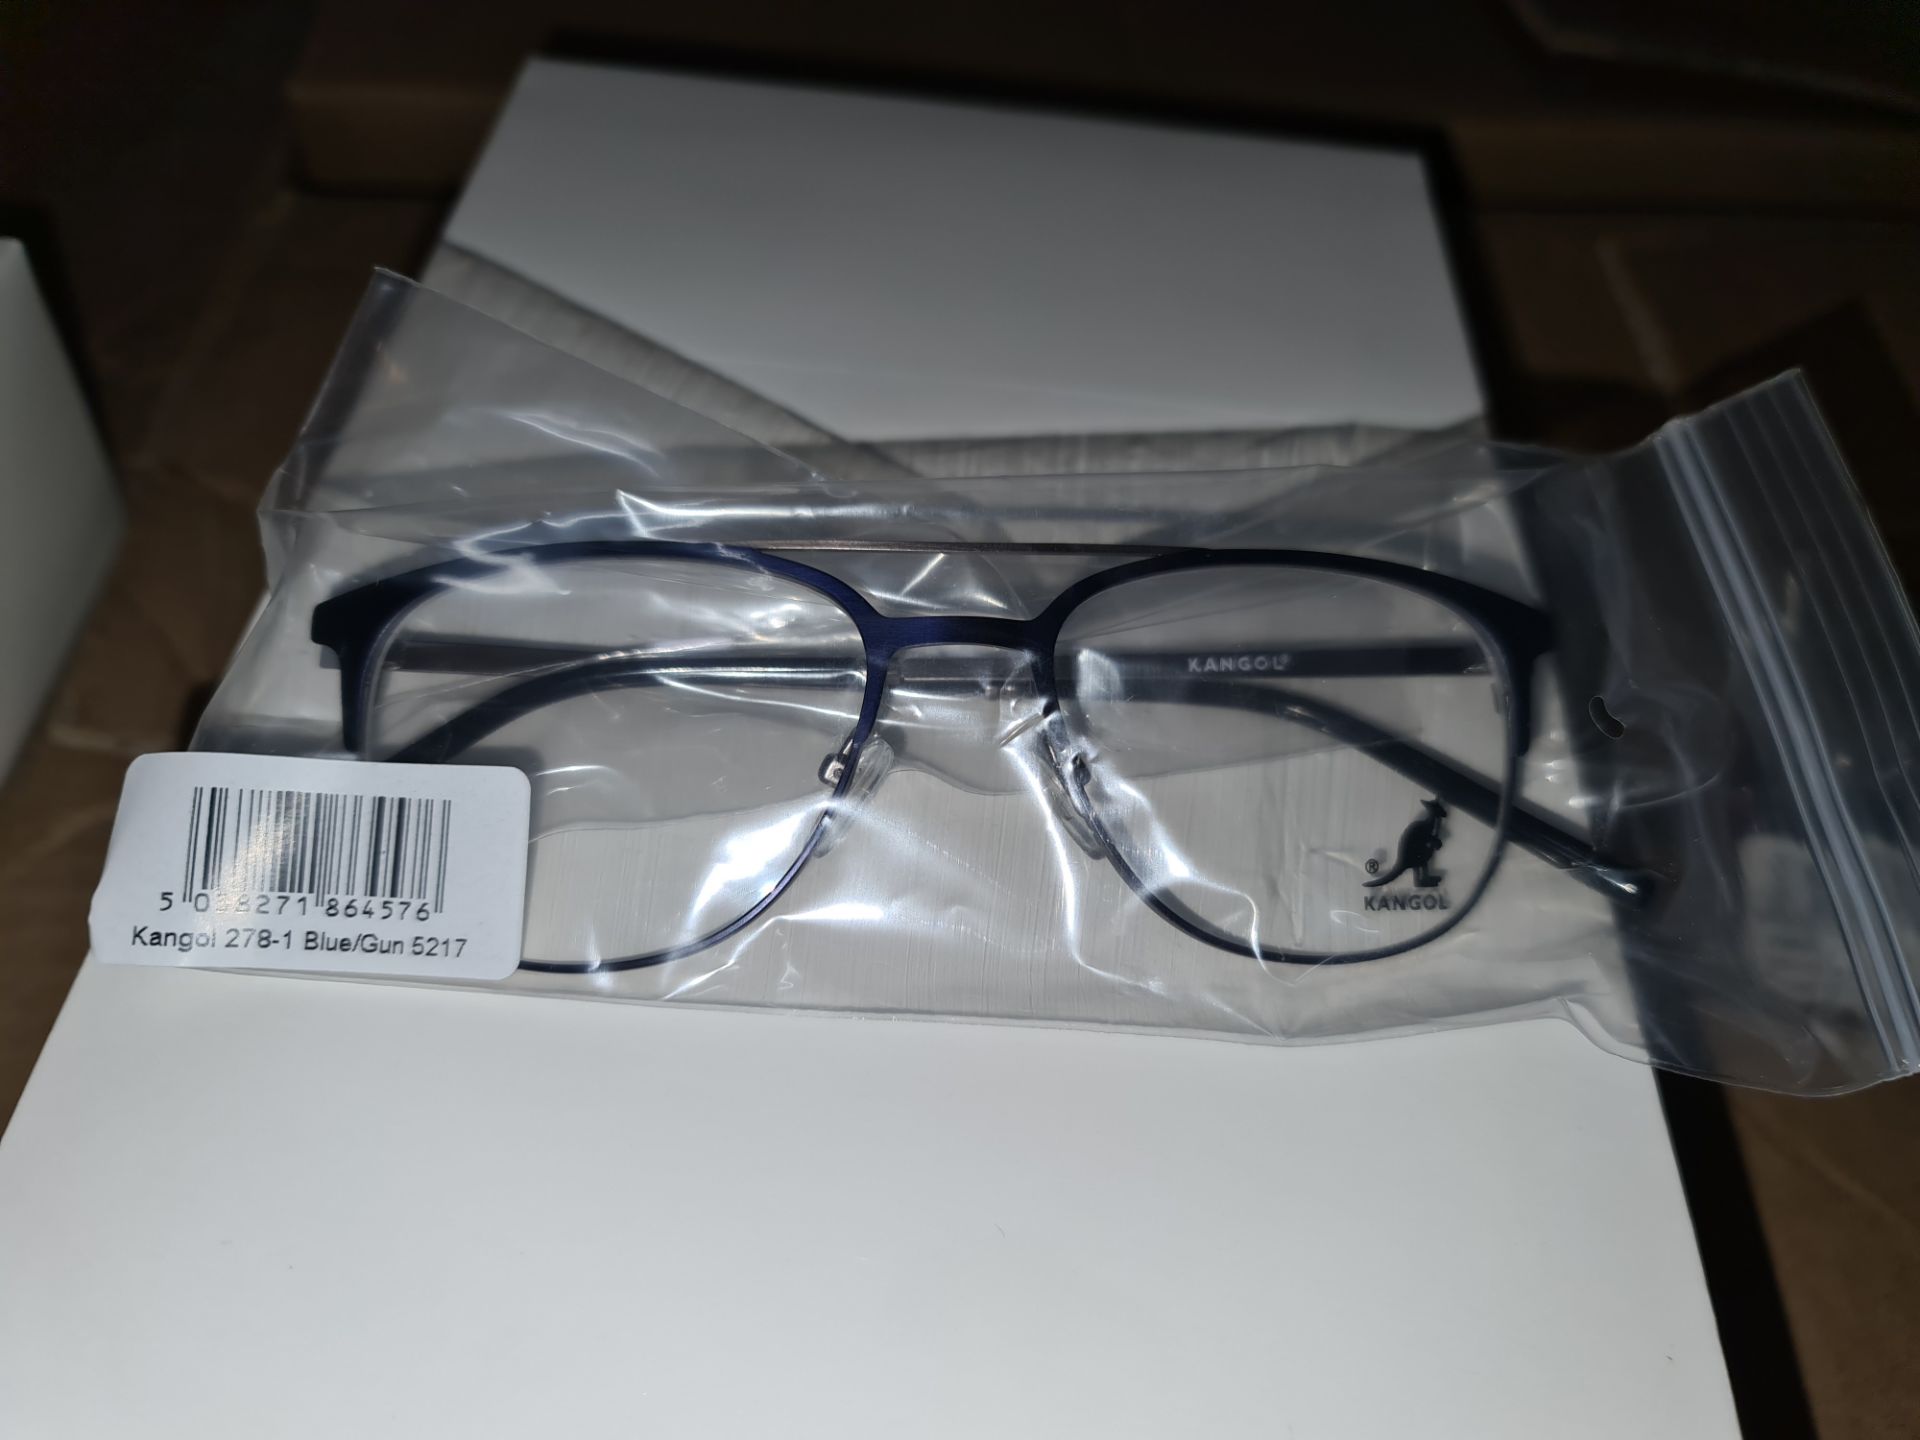 440,000 Prescription Glasses Frames: The total stock of frames from DD Frames Ltd in administration - Image 75 of 221